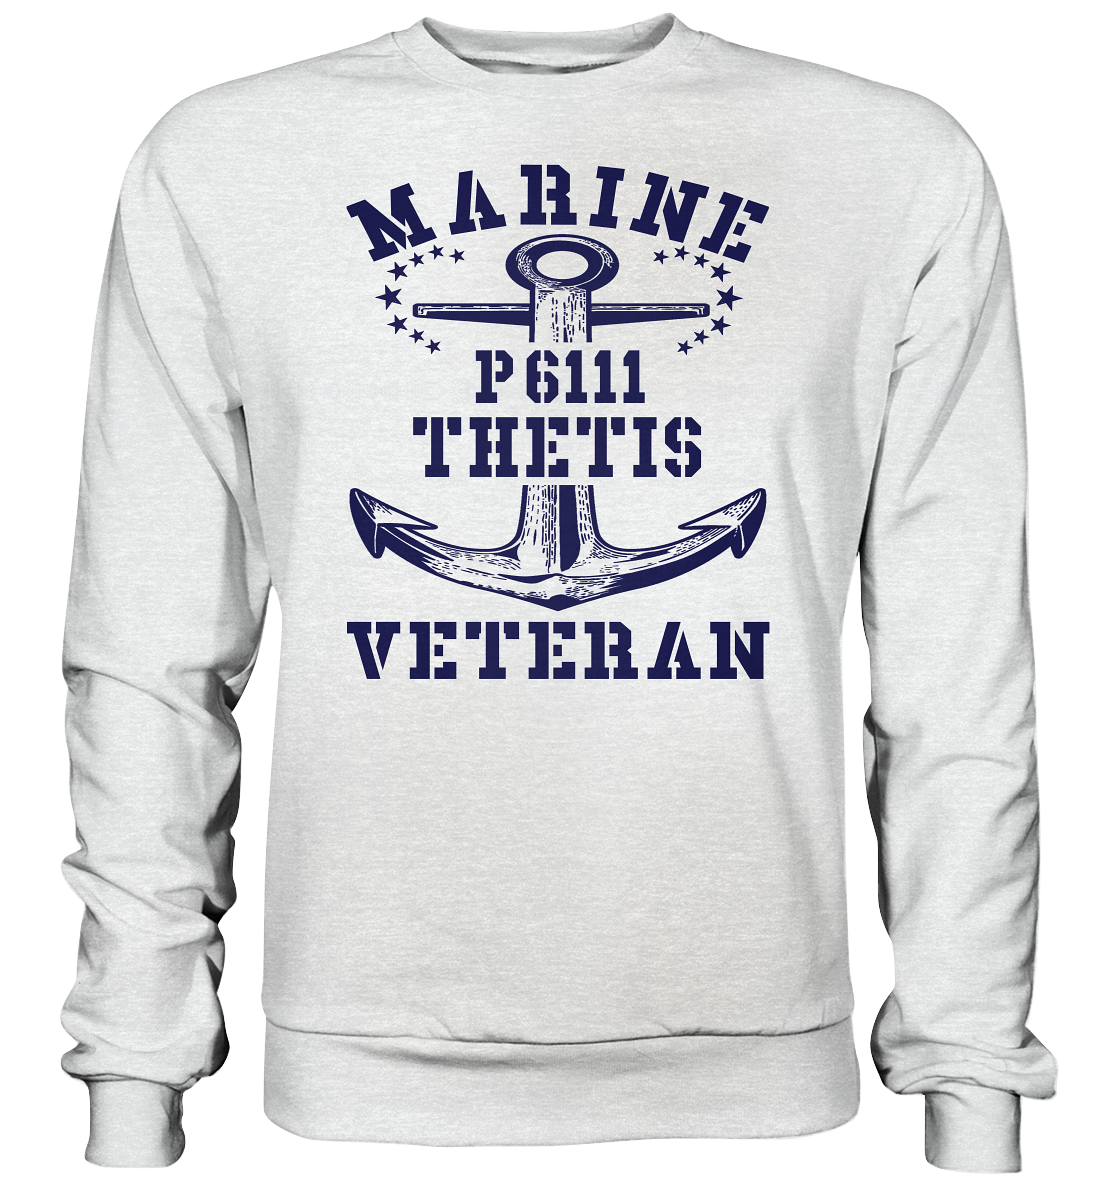 U-Jagdboot P6111 THETIS Marine Veteran - Premium Sweatshirt